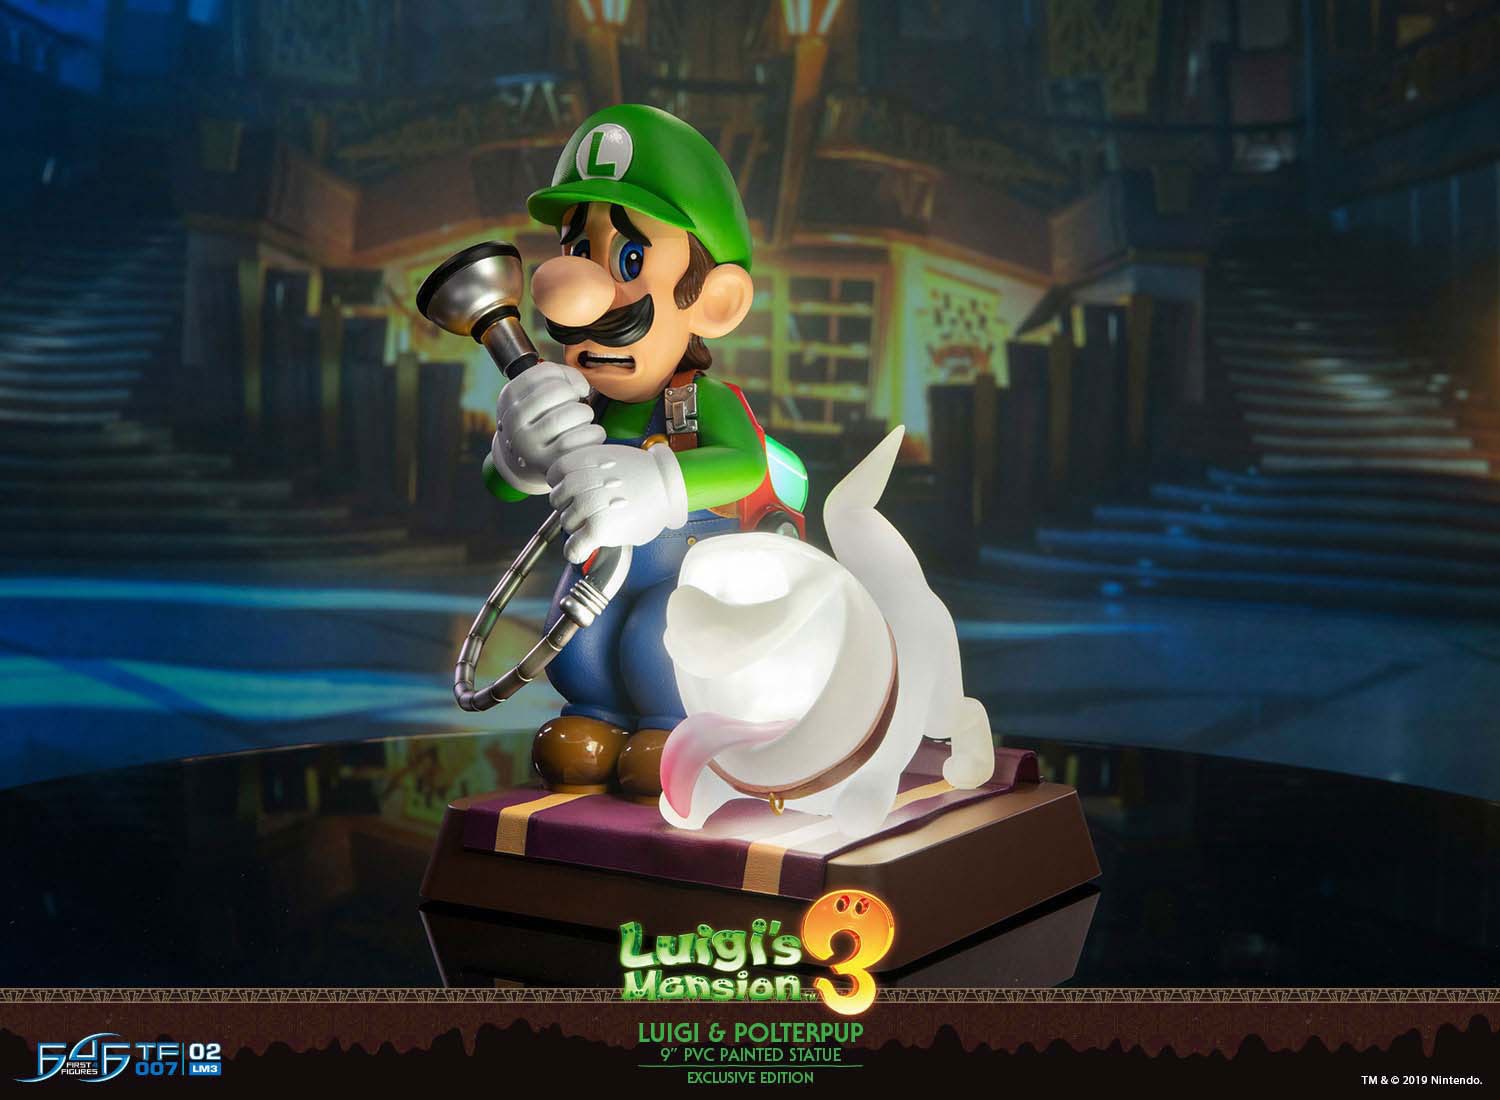 Luigi's Mansion 3 - Luigi & Polterpup 9 PVC Painted Statue